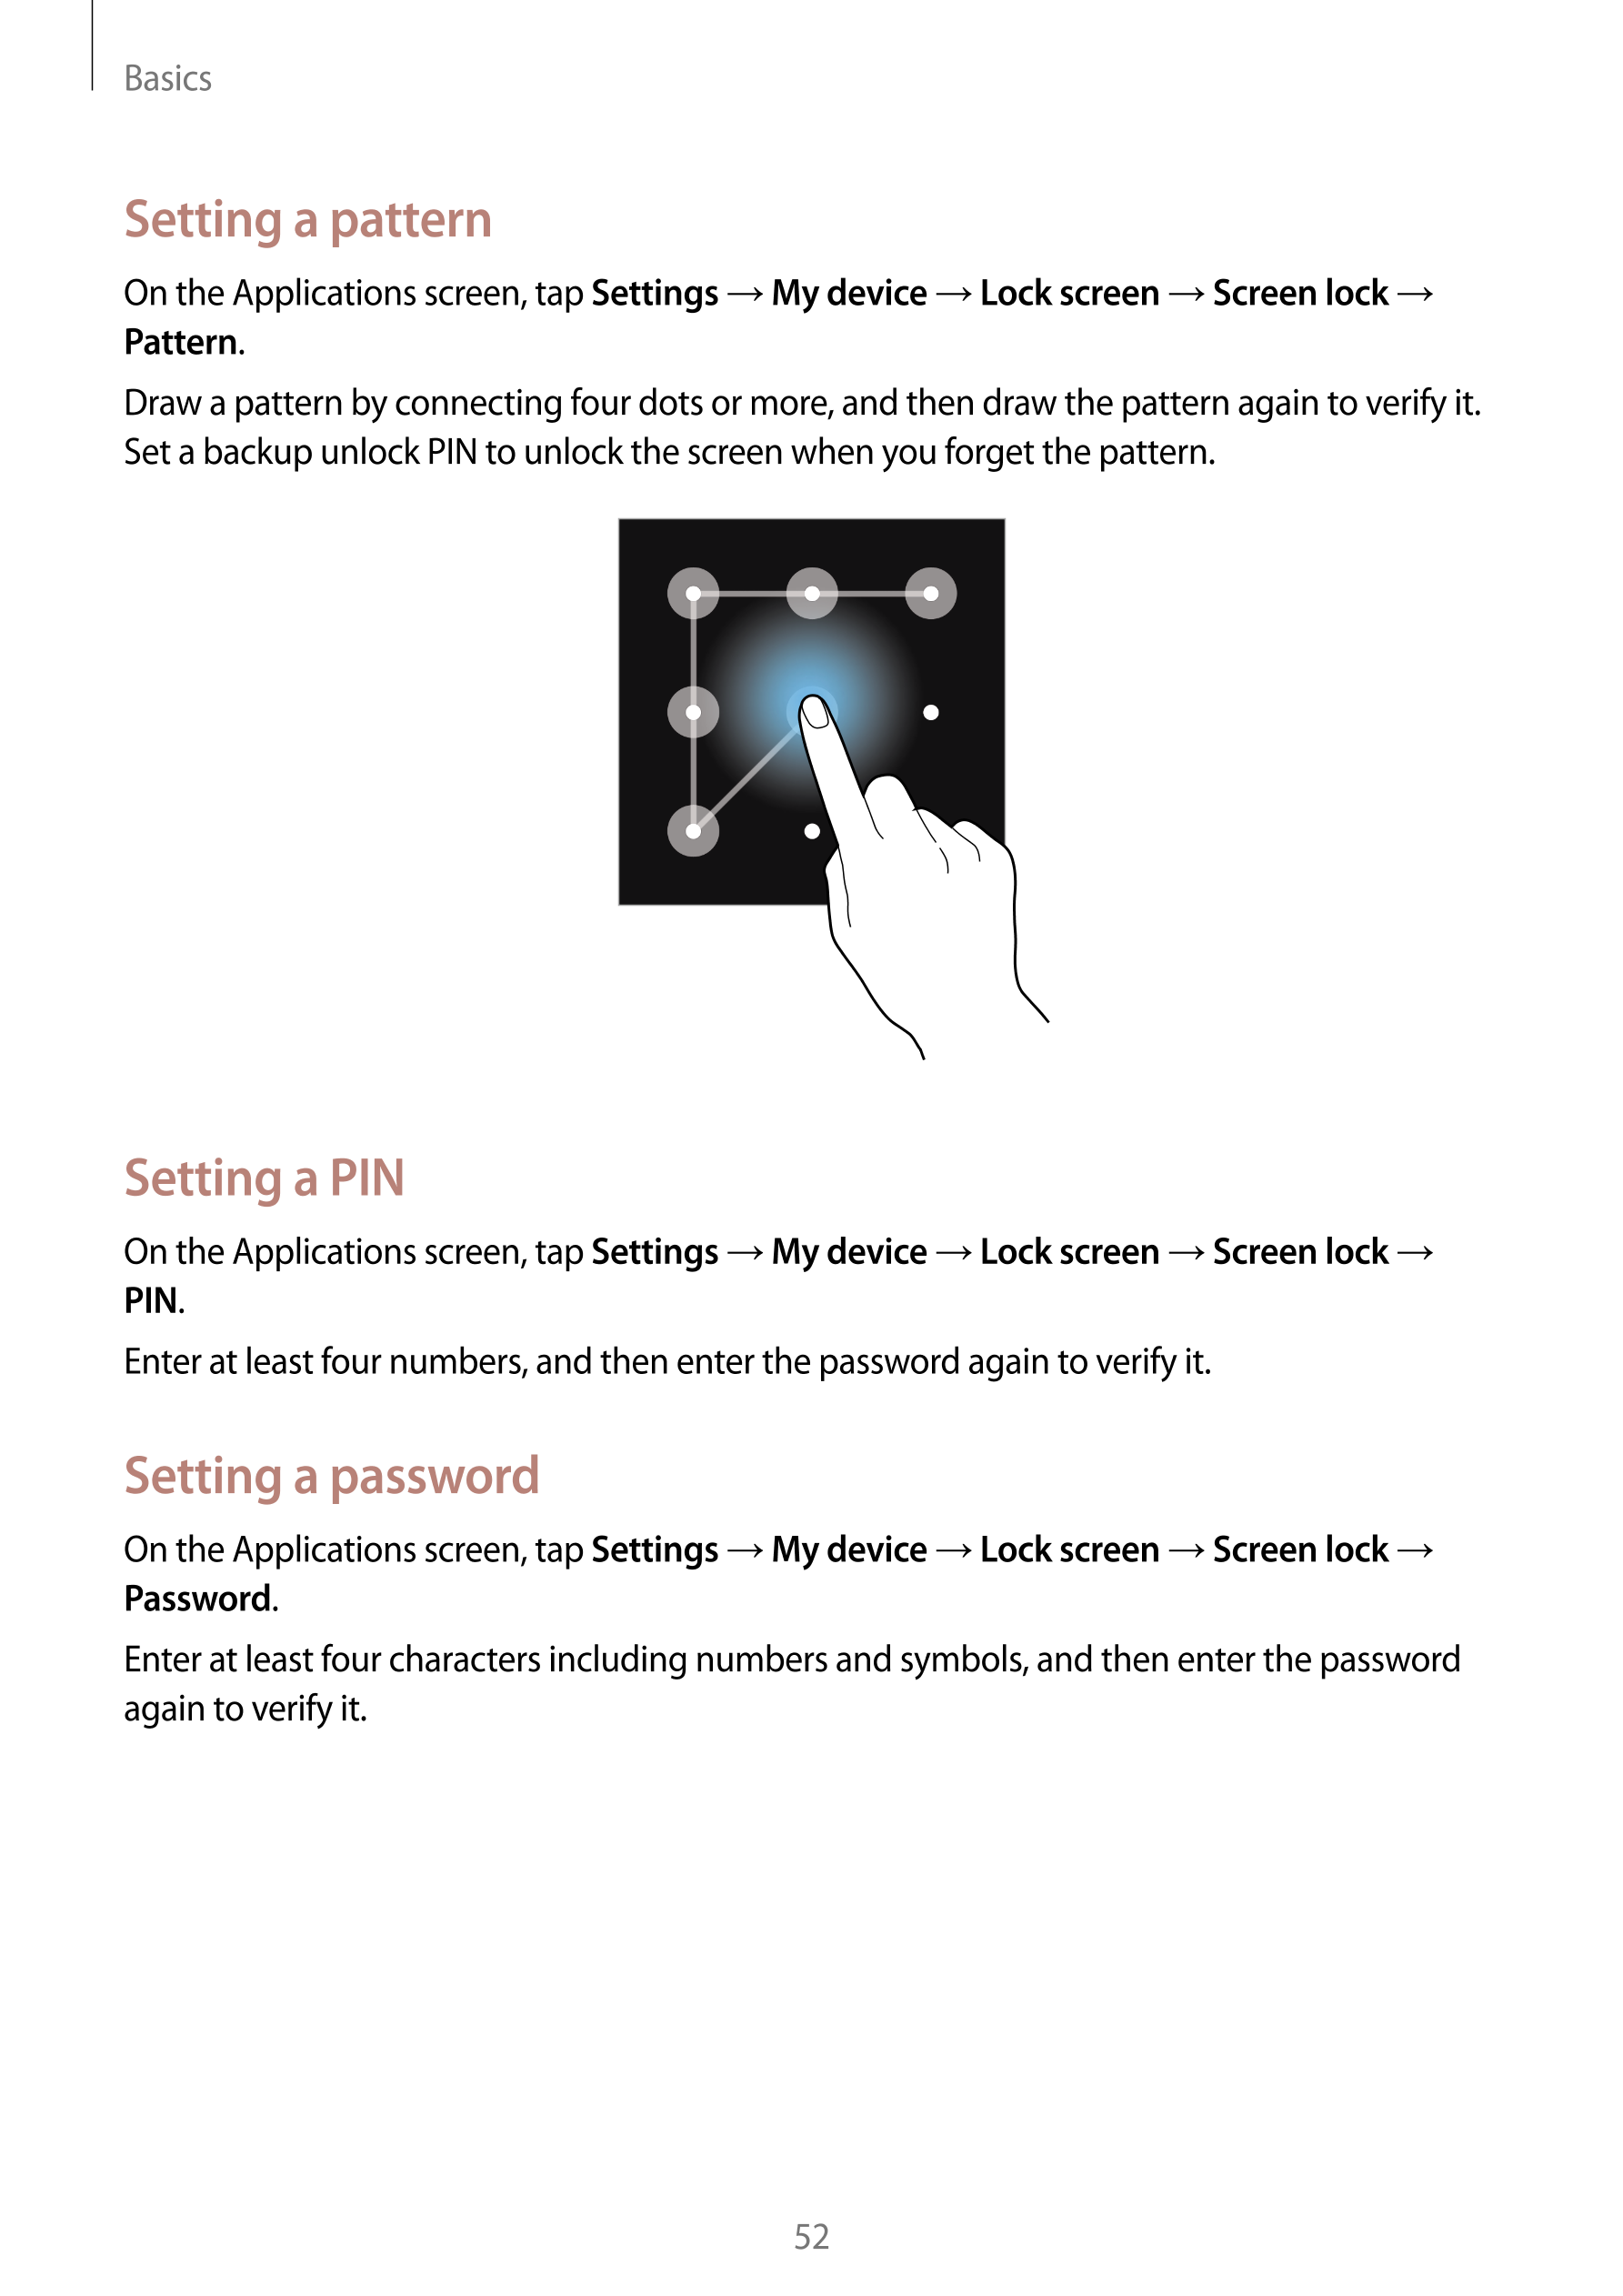 Basics
Setting a pattern
On the Applications screen, tap  Settings  →  My device  →  Lock screen  →  Screen lock  → 
Pattern.
Dr